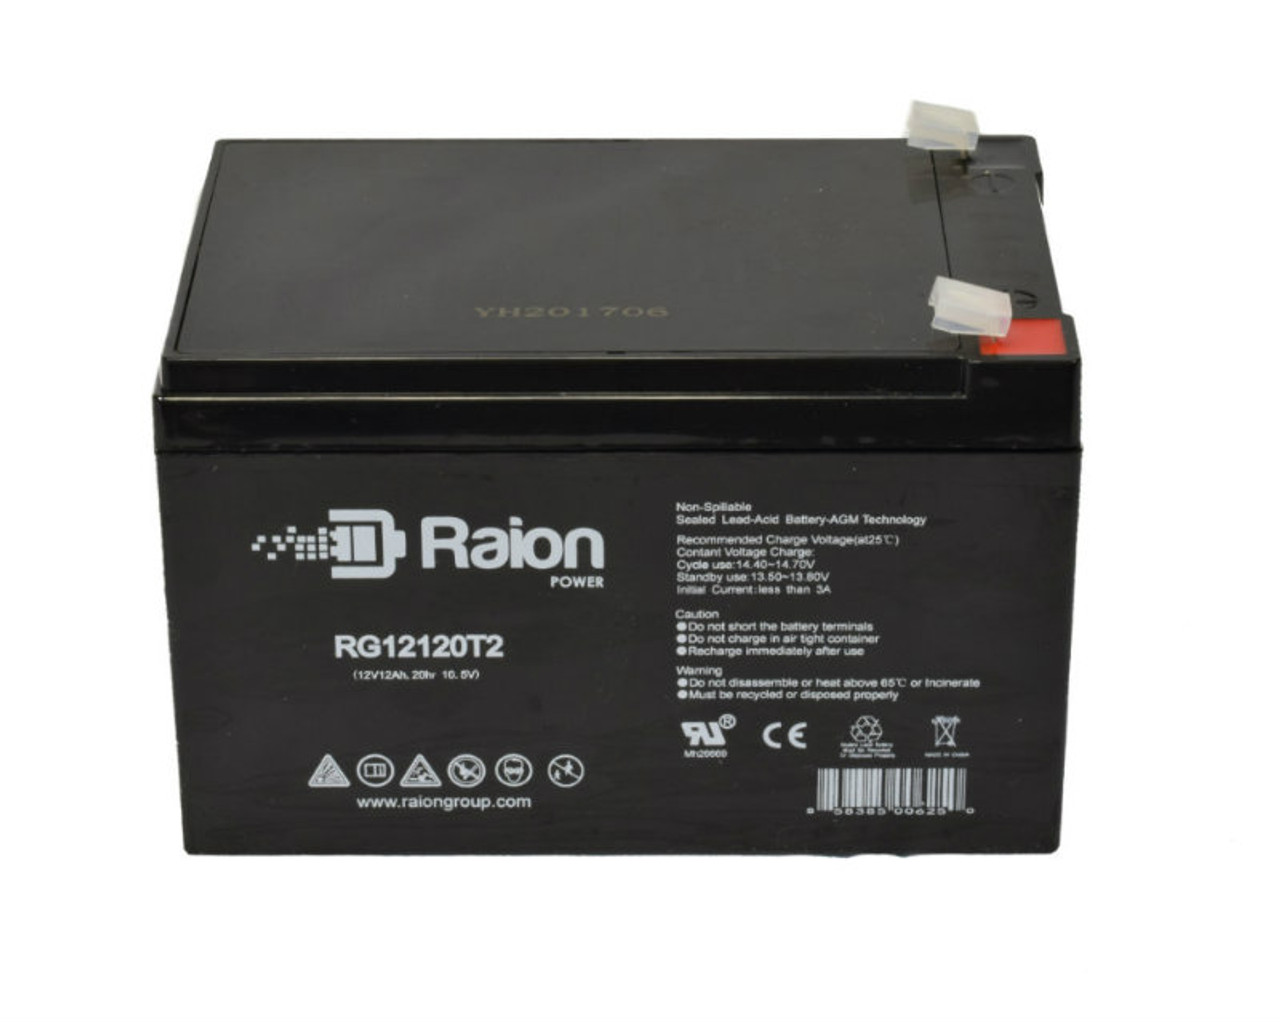 Raion Power RG12120T2 SLA Battery for Narada 6-FM-12